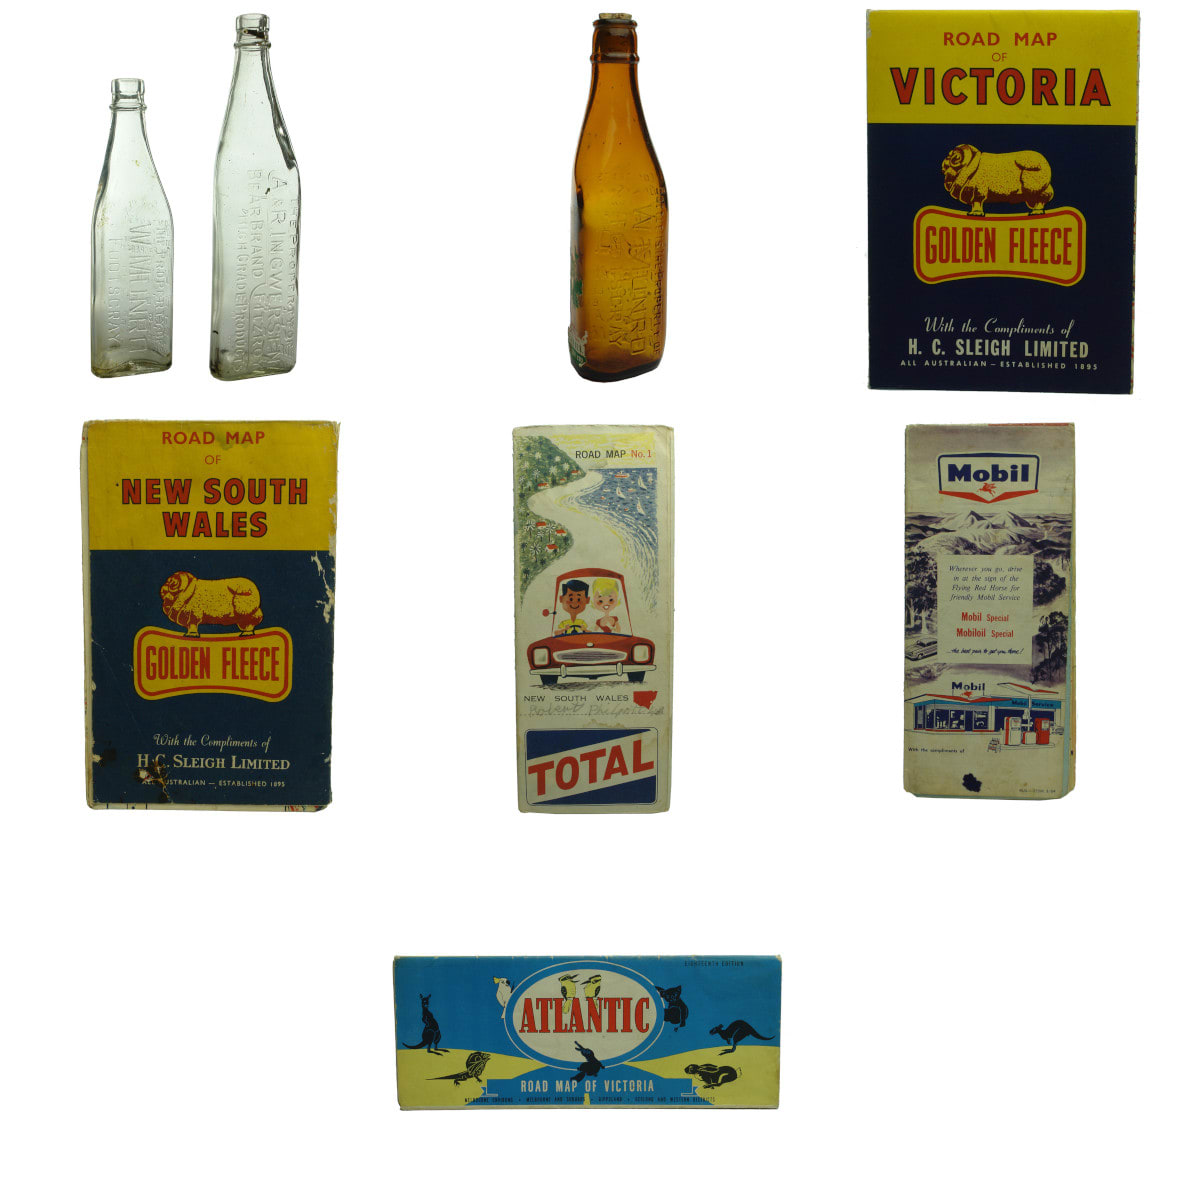 Garagenalia. Three kero bottles and Five Petrol Company Road Maps: 2 x Munro Footscray & Ingwersen, Bear Brand; Golden Fleece Victoria; Golden Fleece New South Wales; Total New South Wales; Mobil New South Wales; Atlantic Victoria.